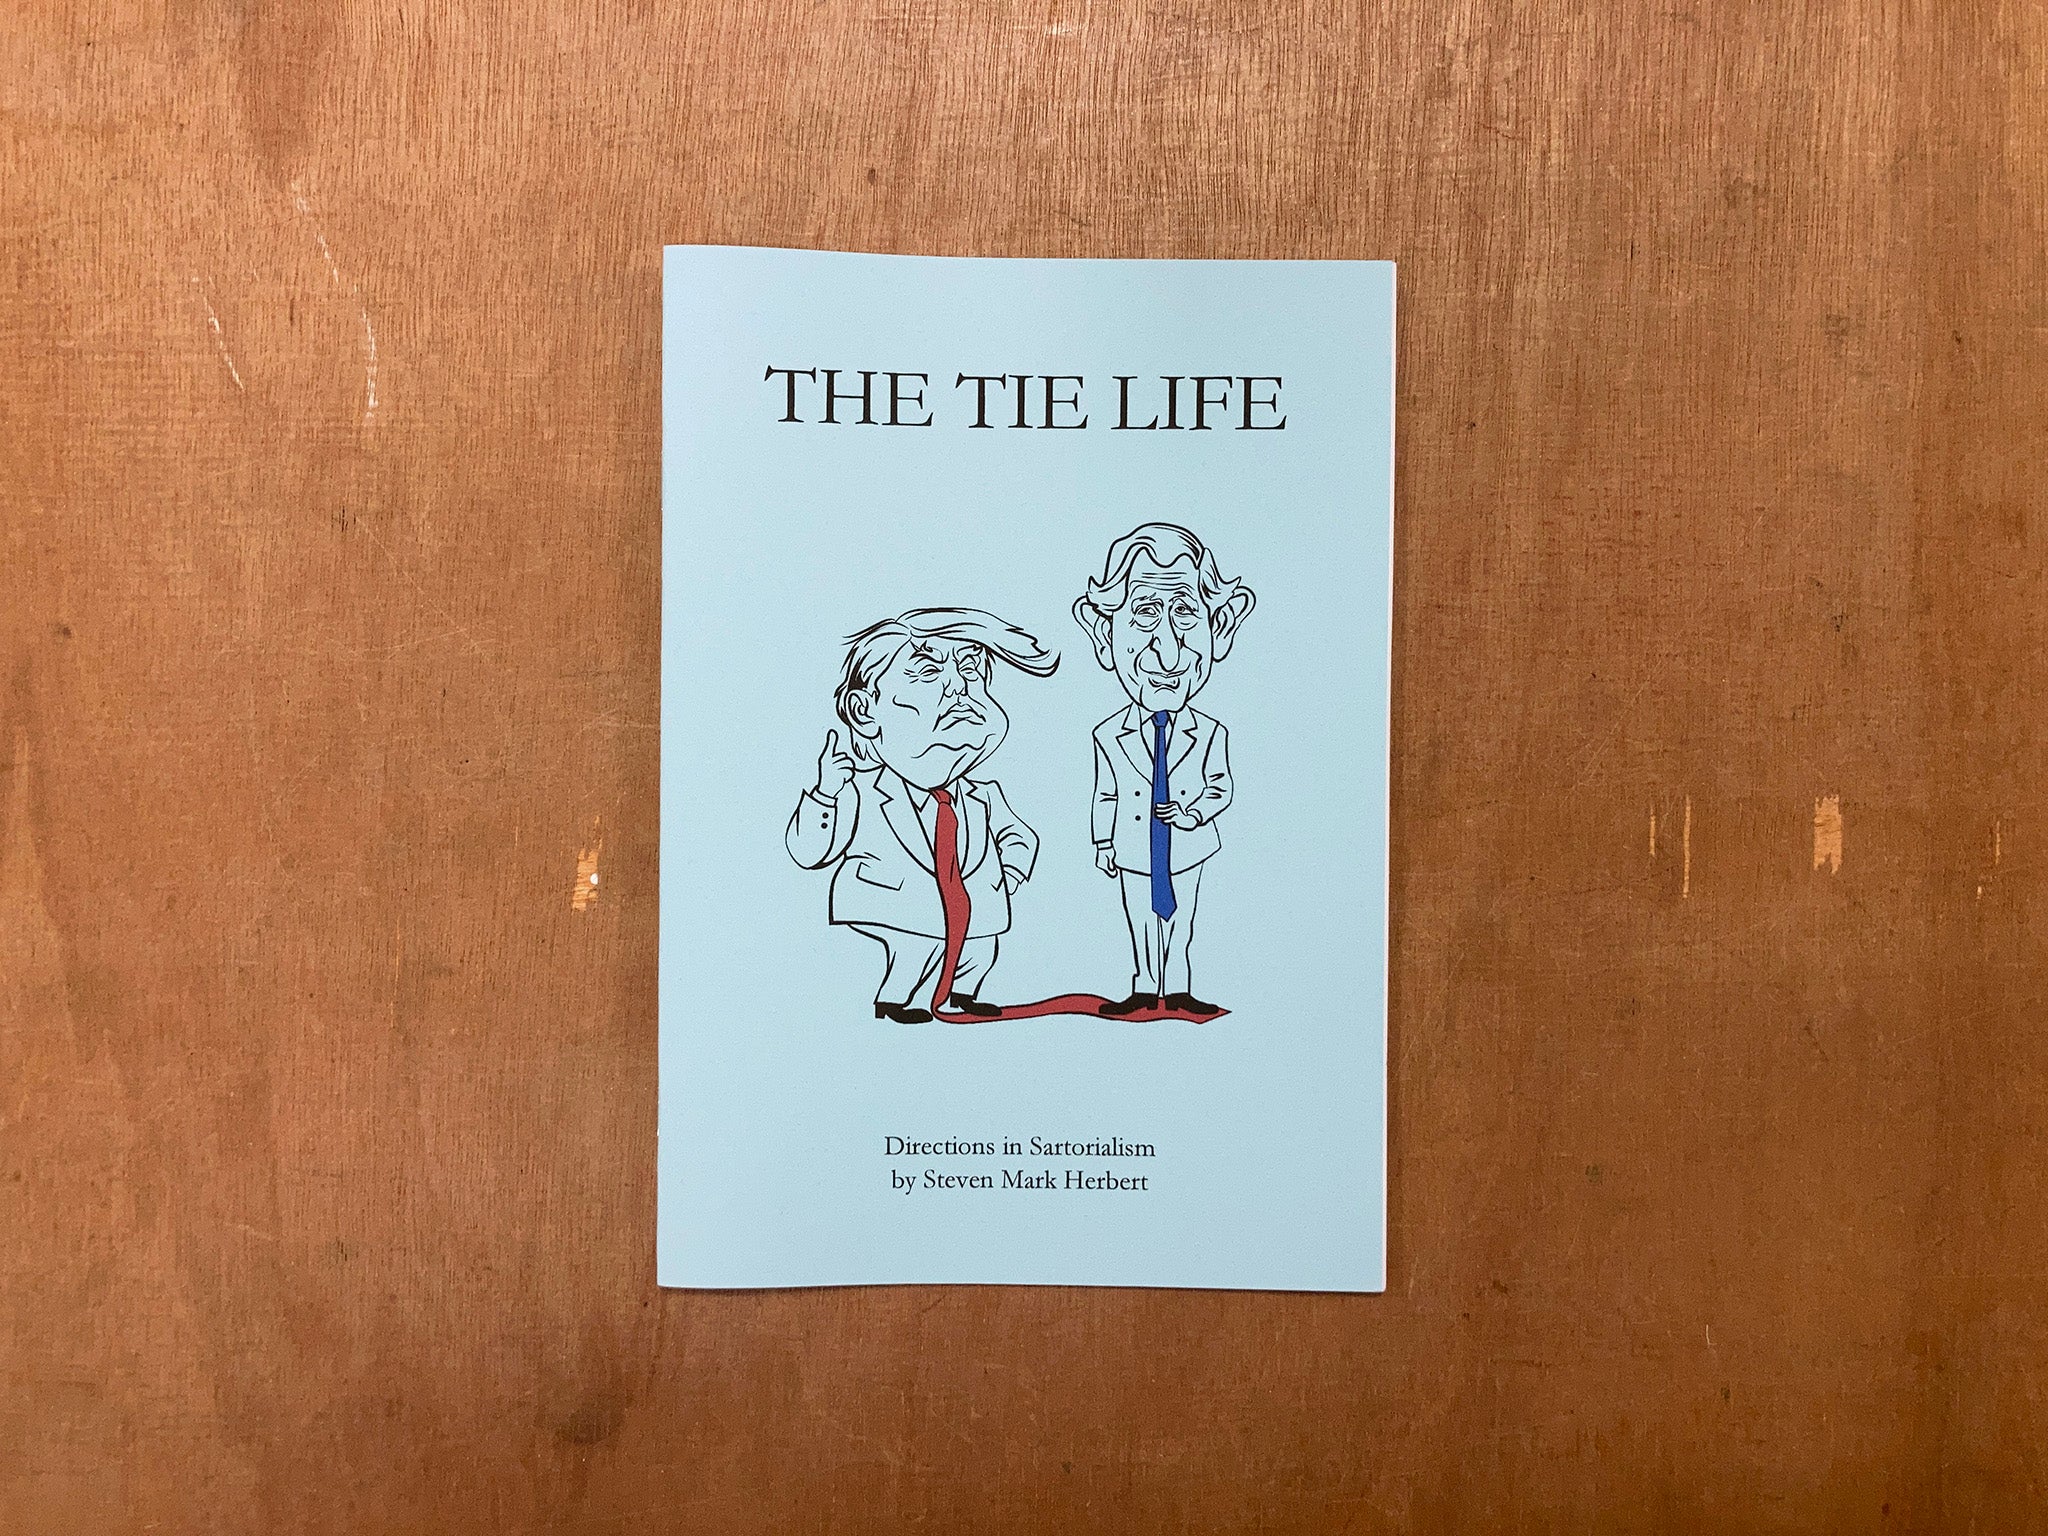 THE TIE LIFE by Steven Mark Herbert